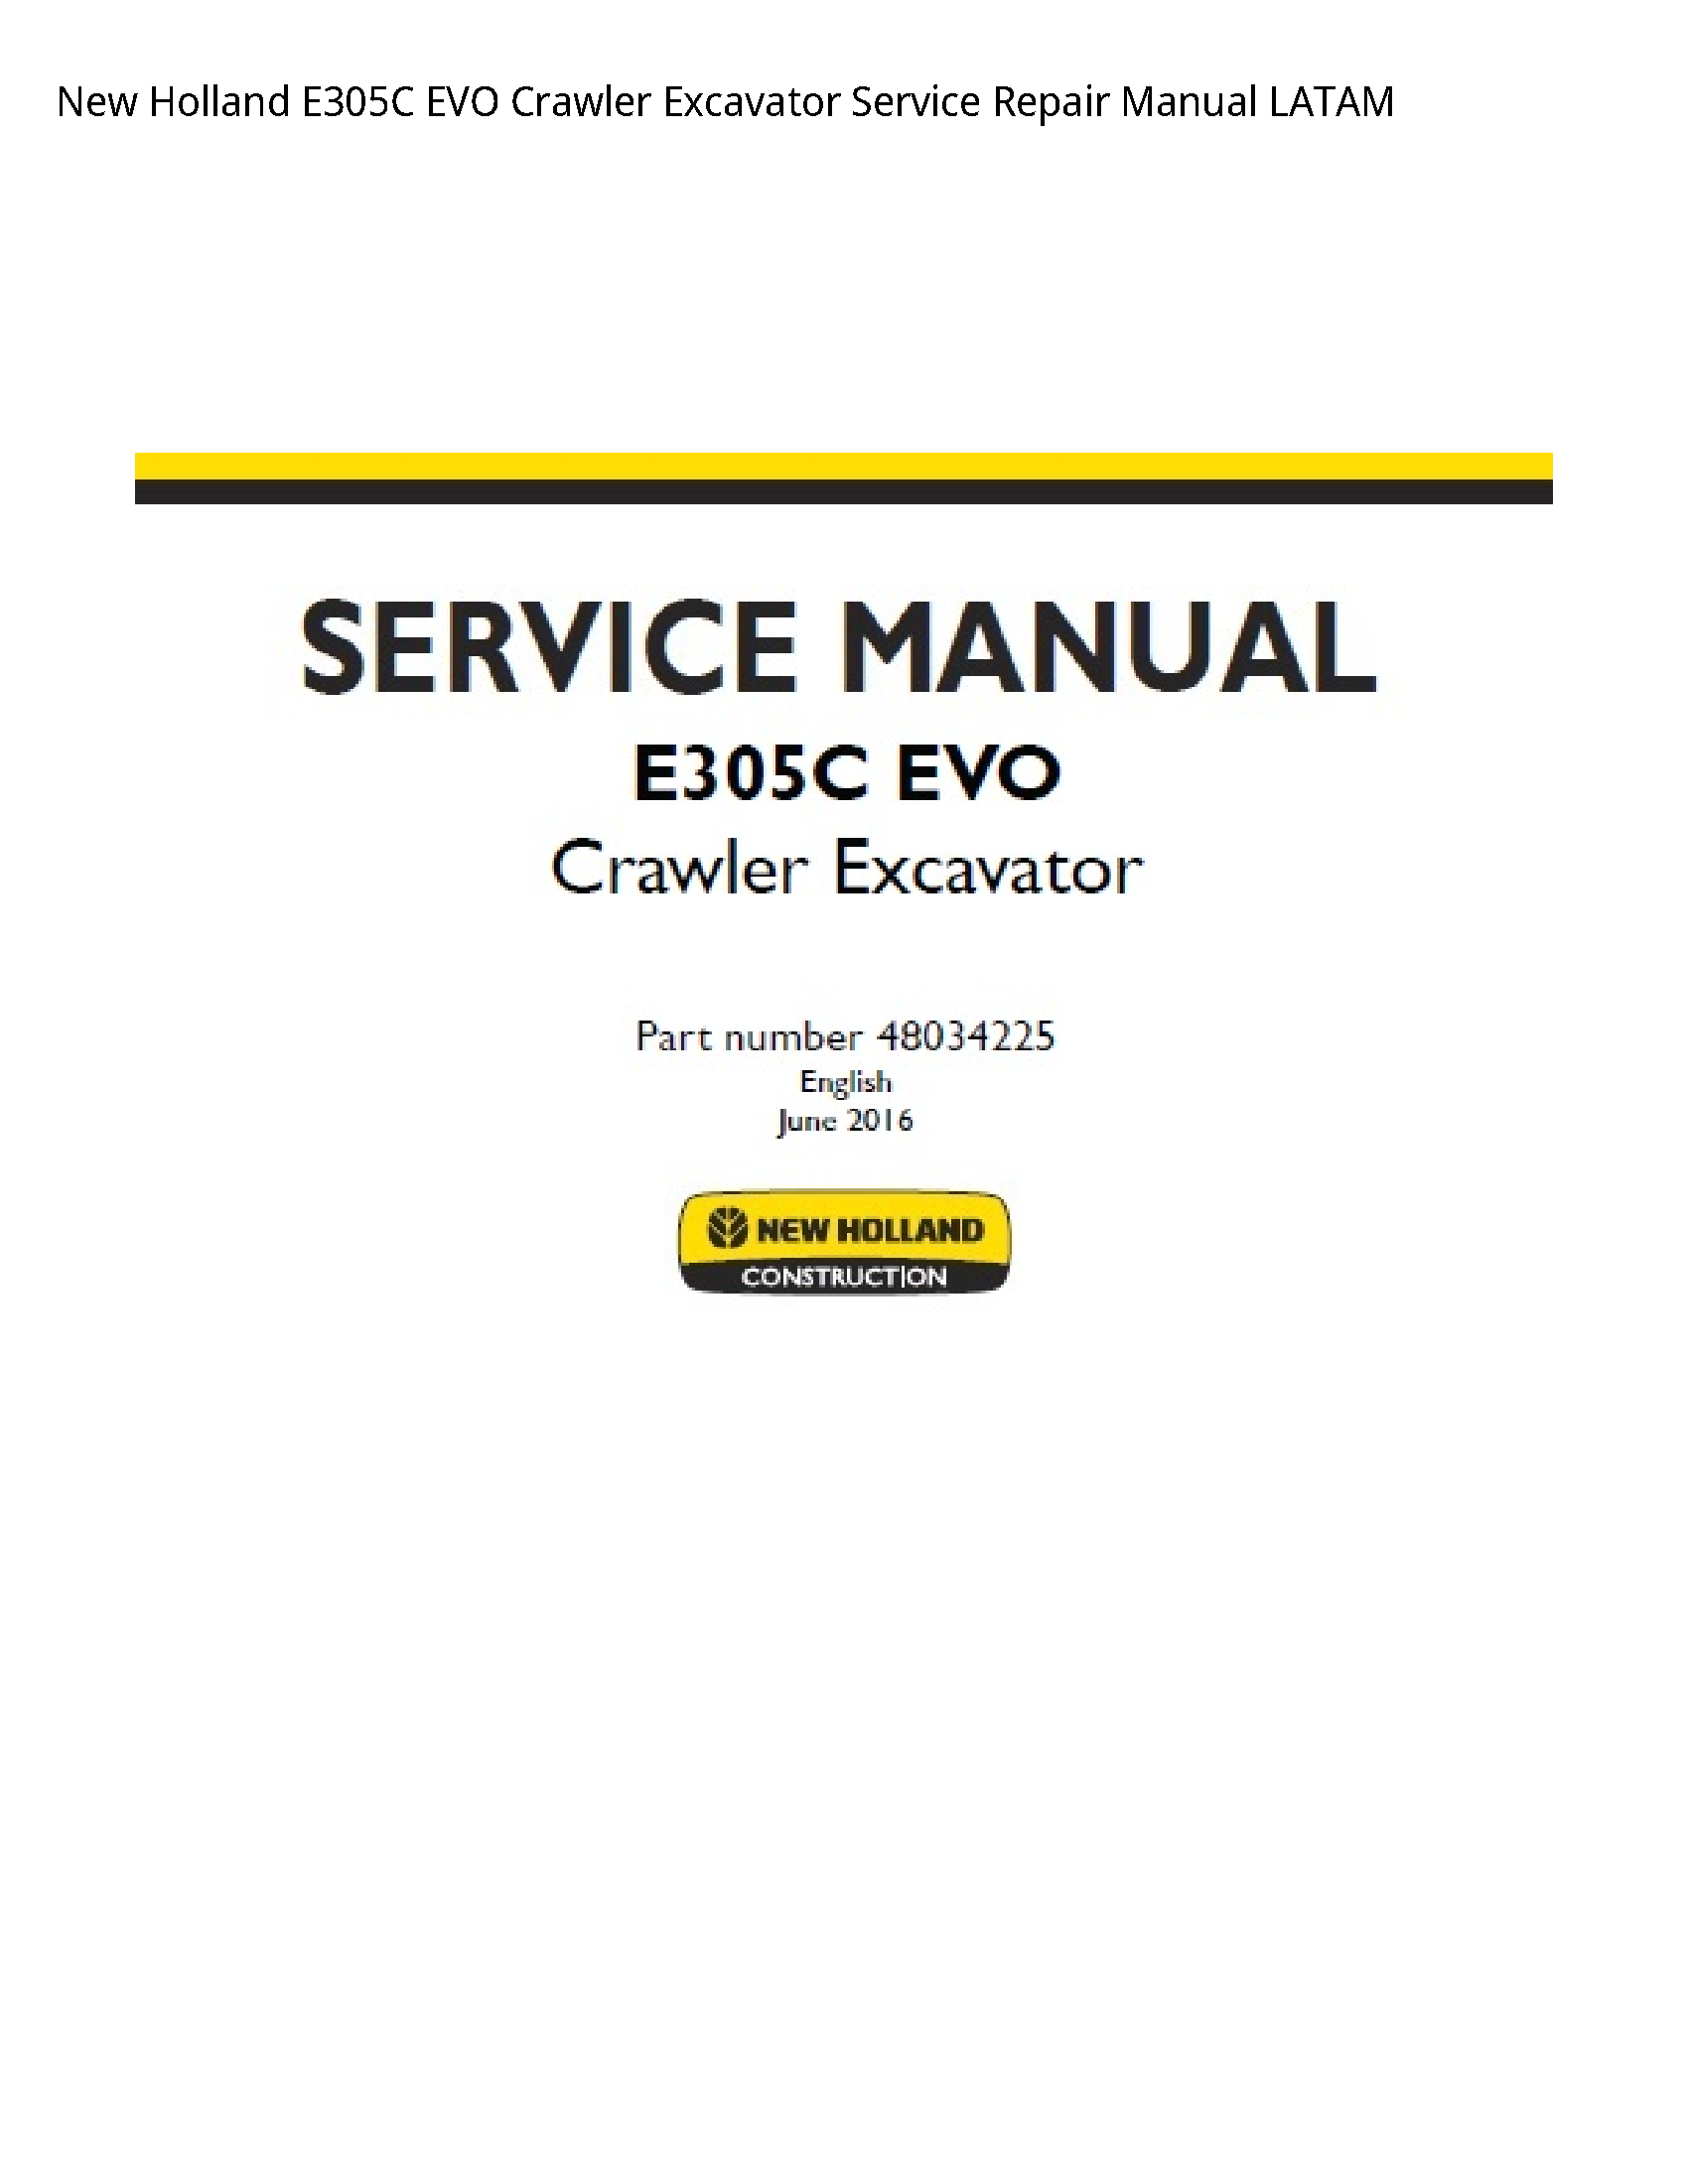 New Holland E305C EVO Crawler Excavator manual